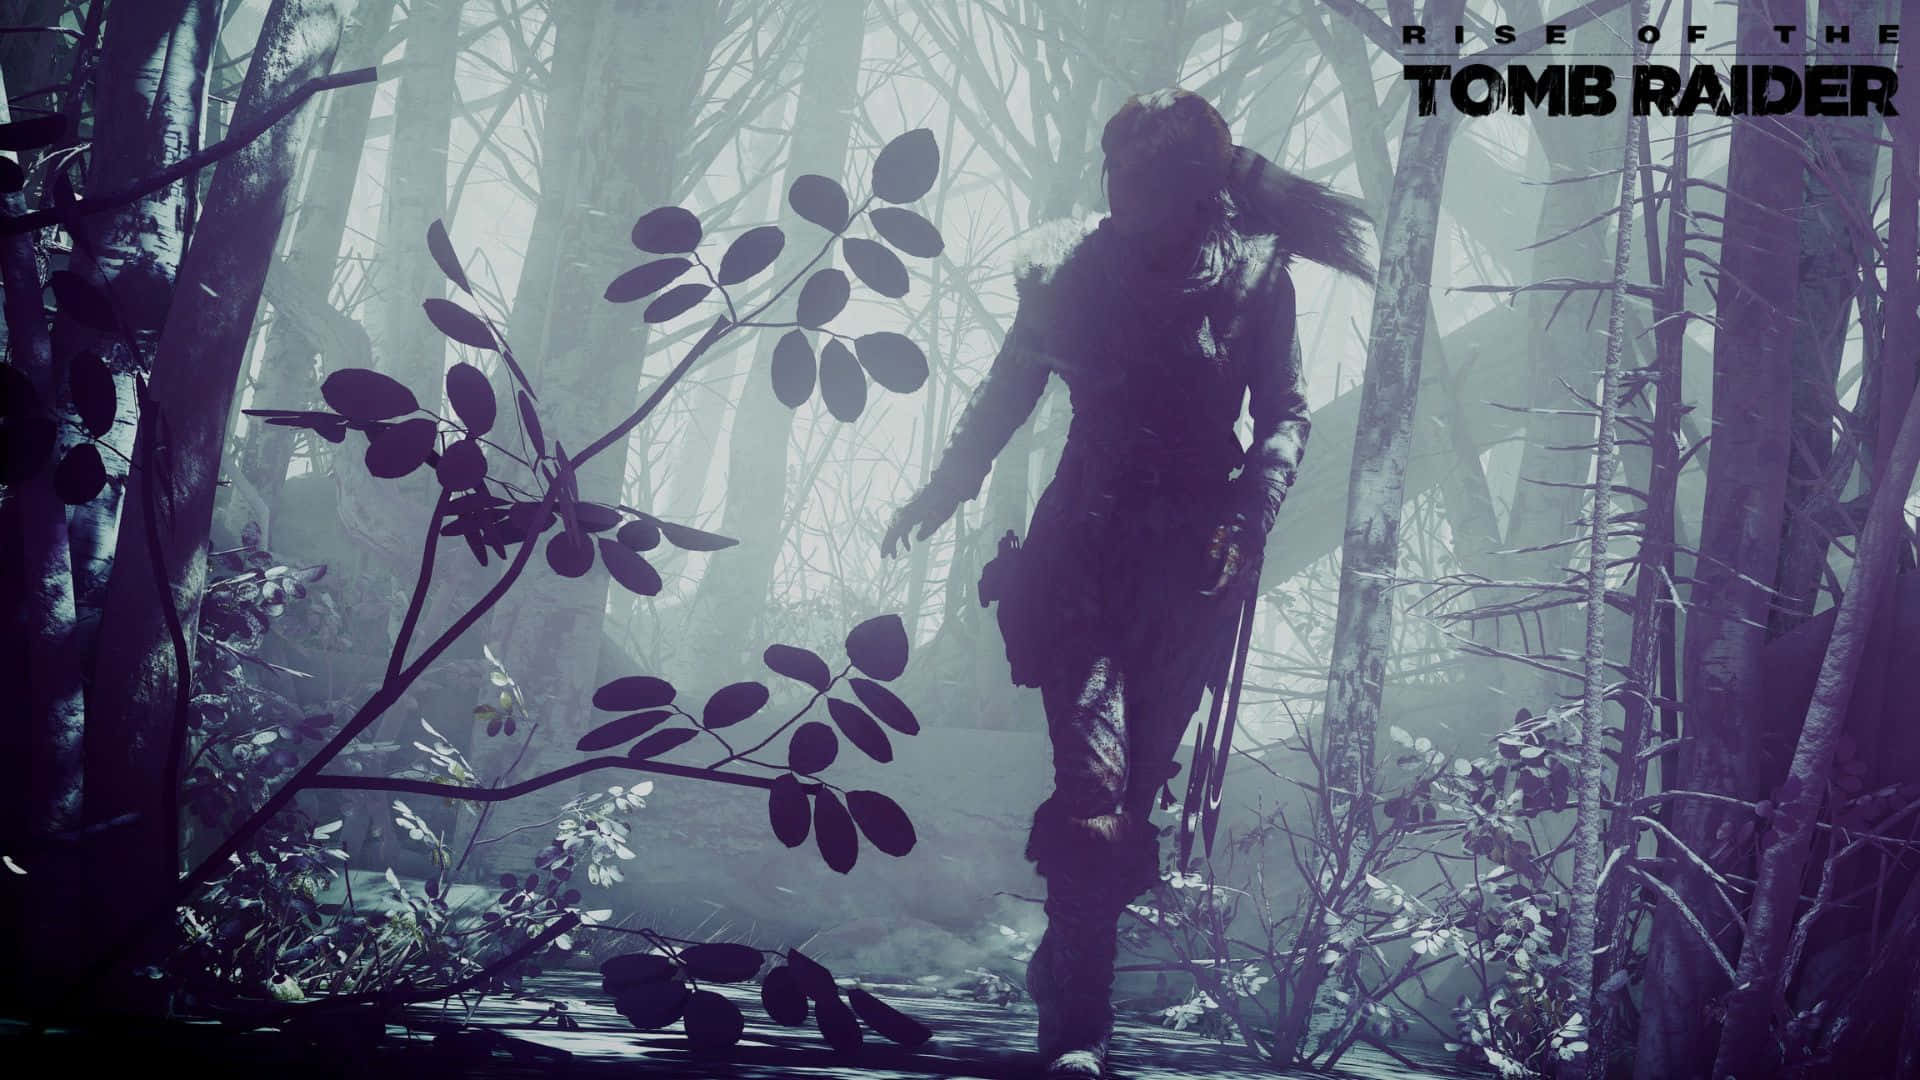 1080prise Of The Tomb Raider Lara Croft Walking Bakgrundsbild.